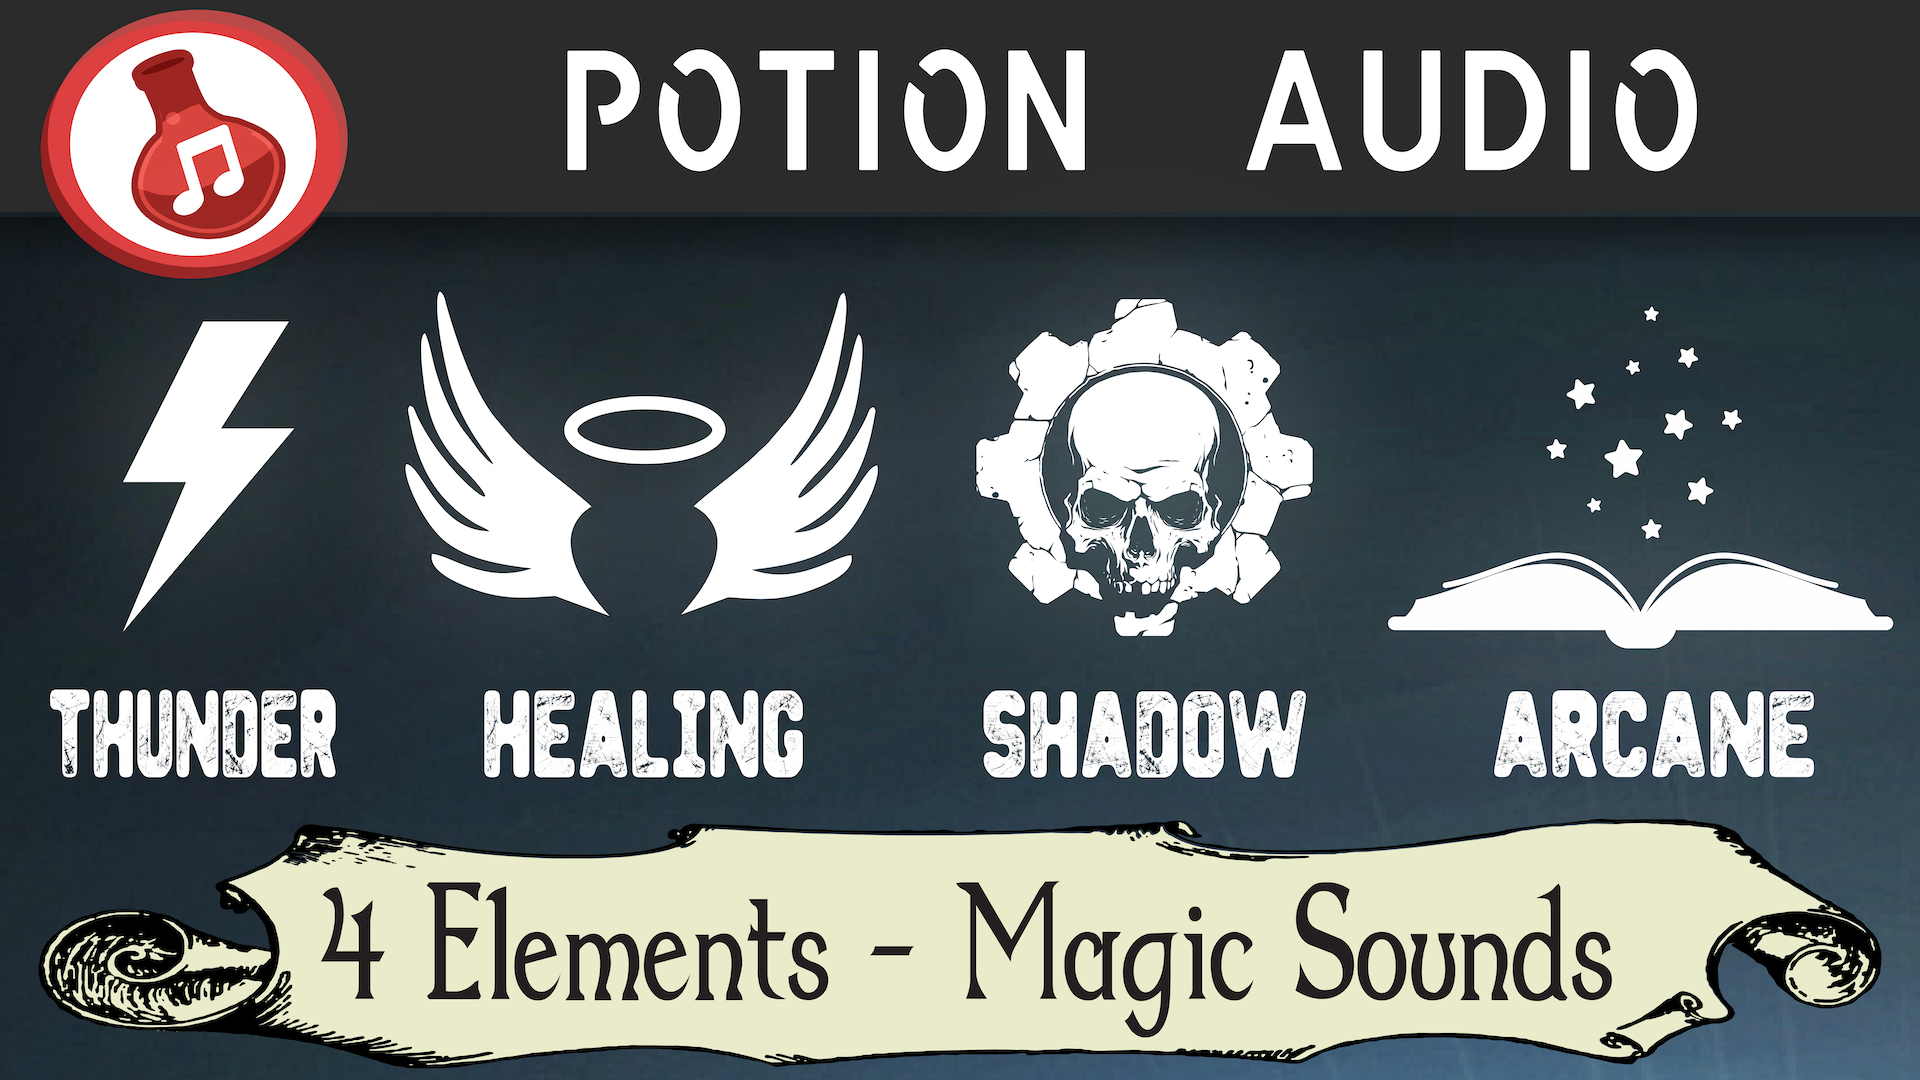 4 Elements - Magic Sounds (Thunder, Healing, Shadow, Arcane)